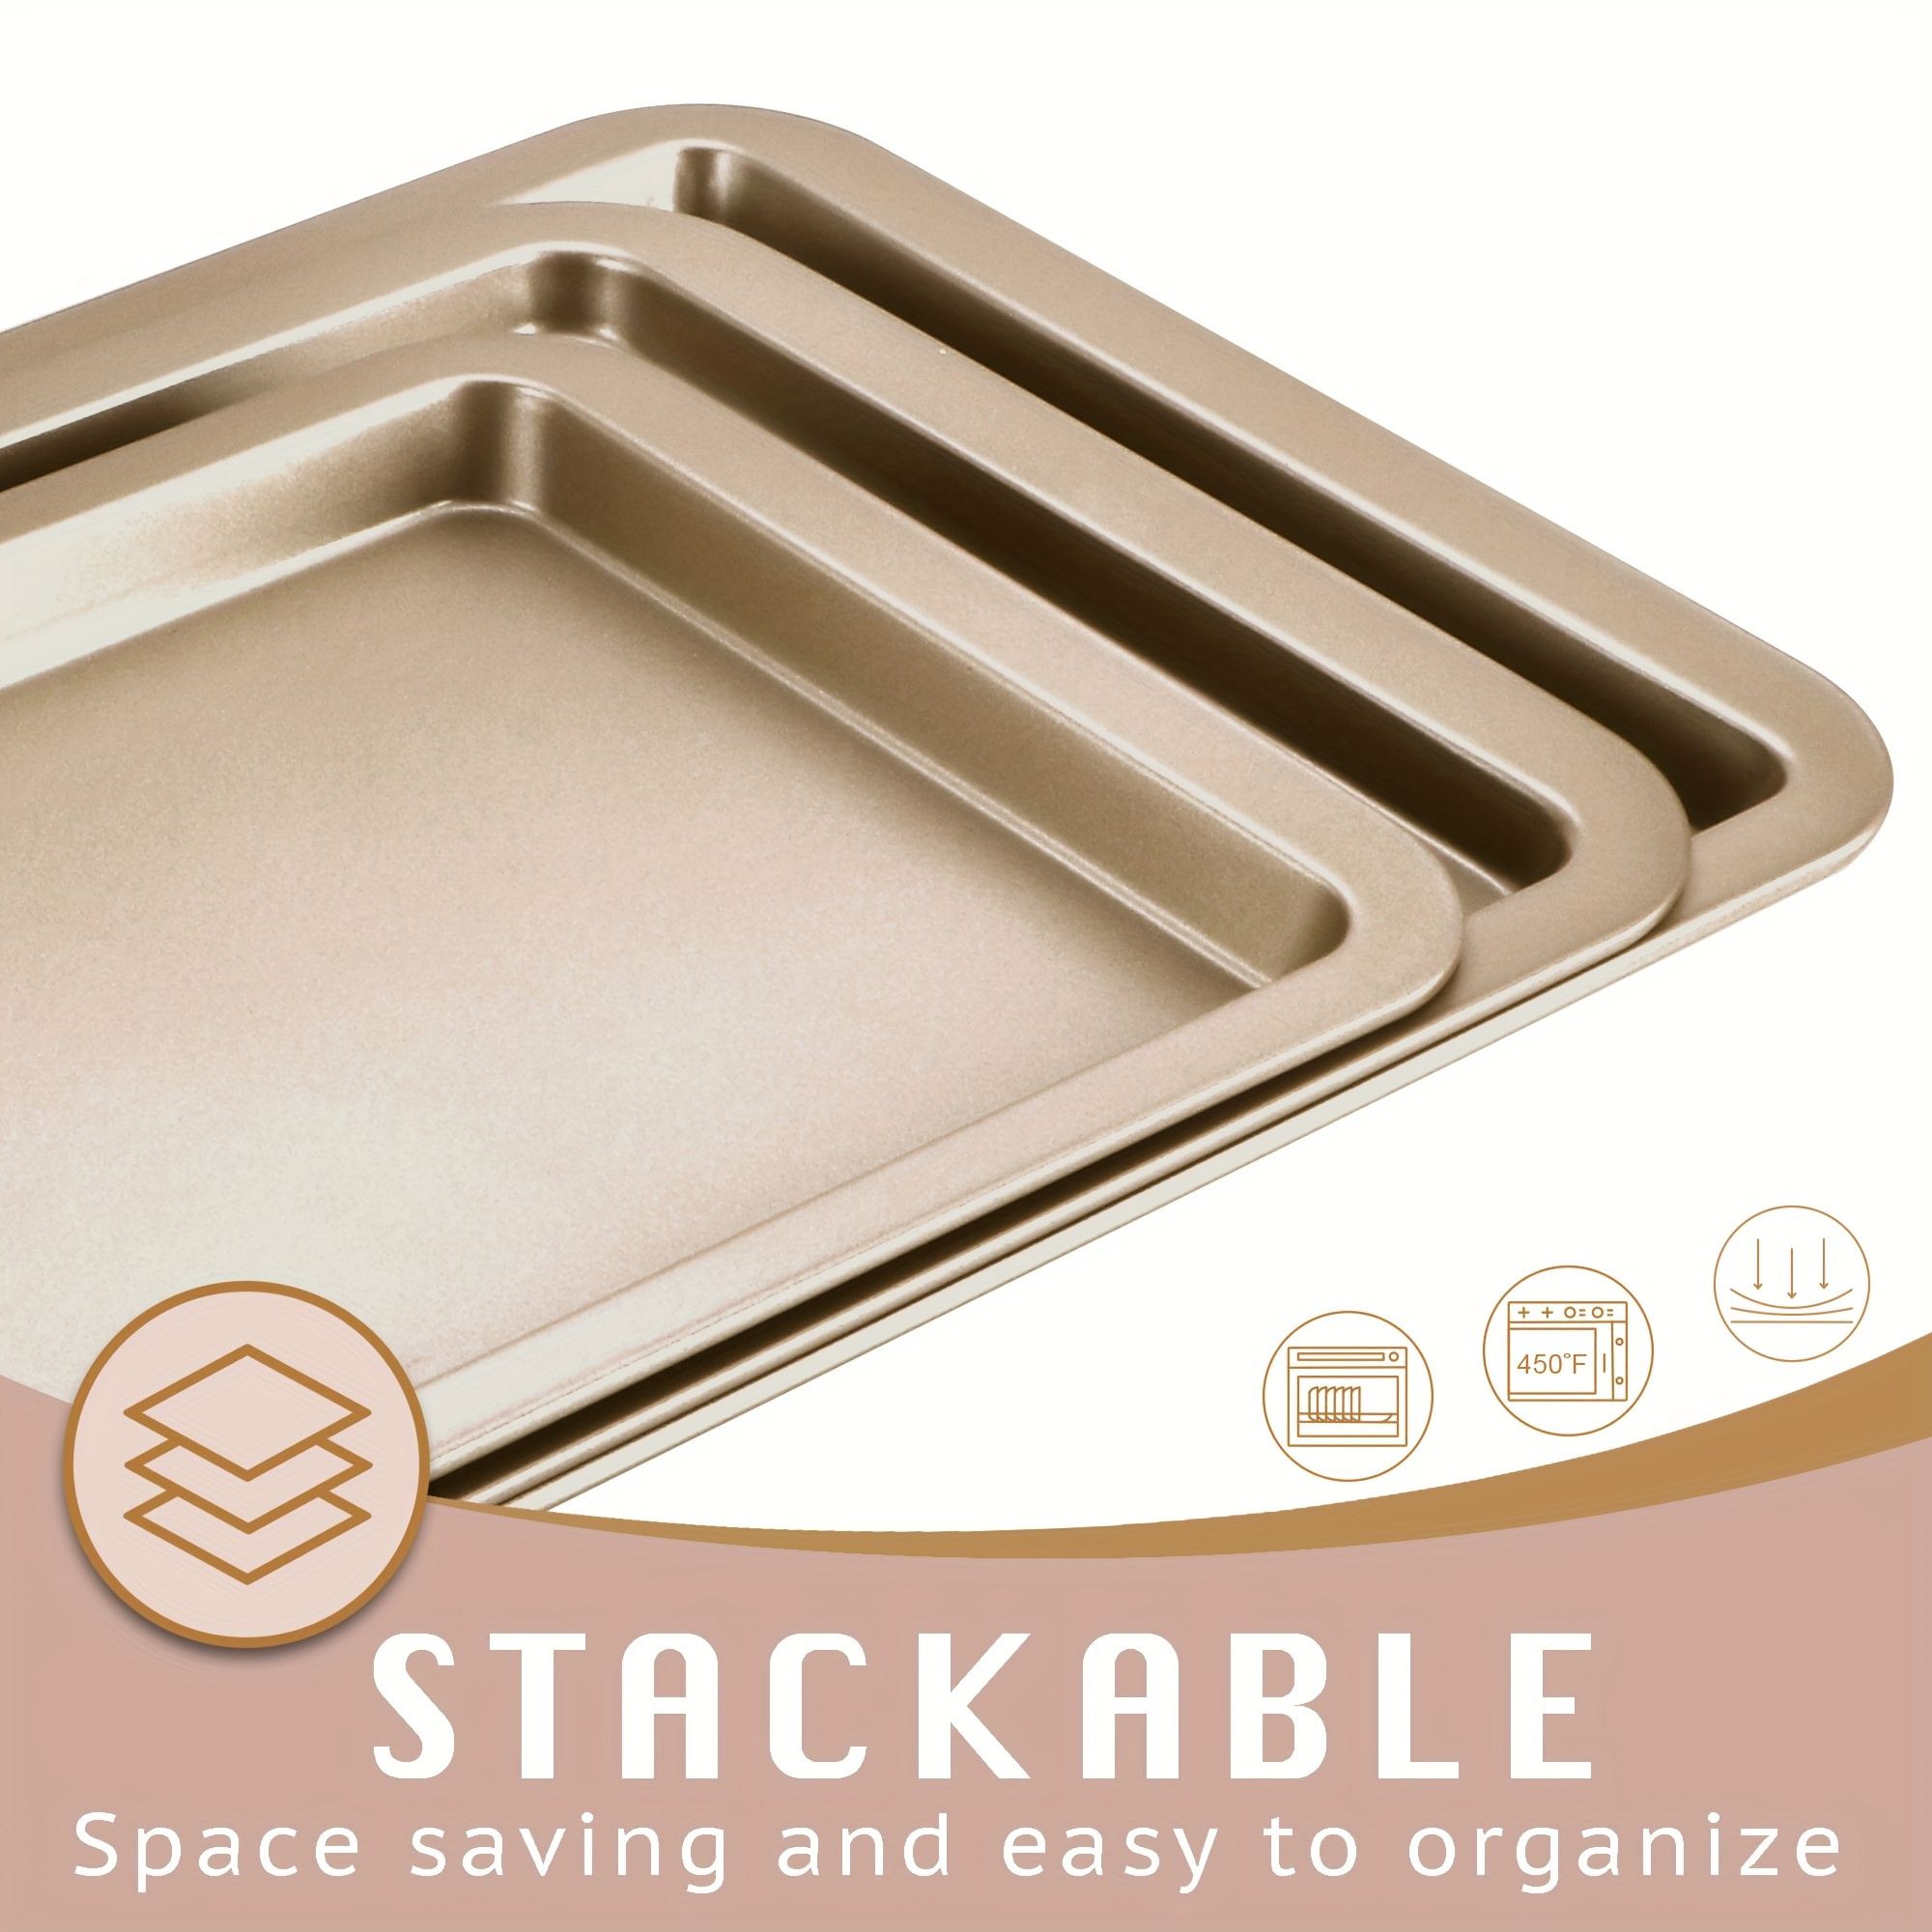 HONGBAKE Bakeware Sets, Baking Pans Set, Nonstick Oven Pan for